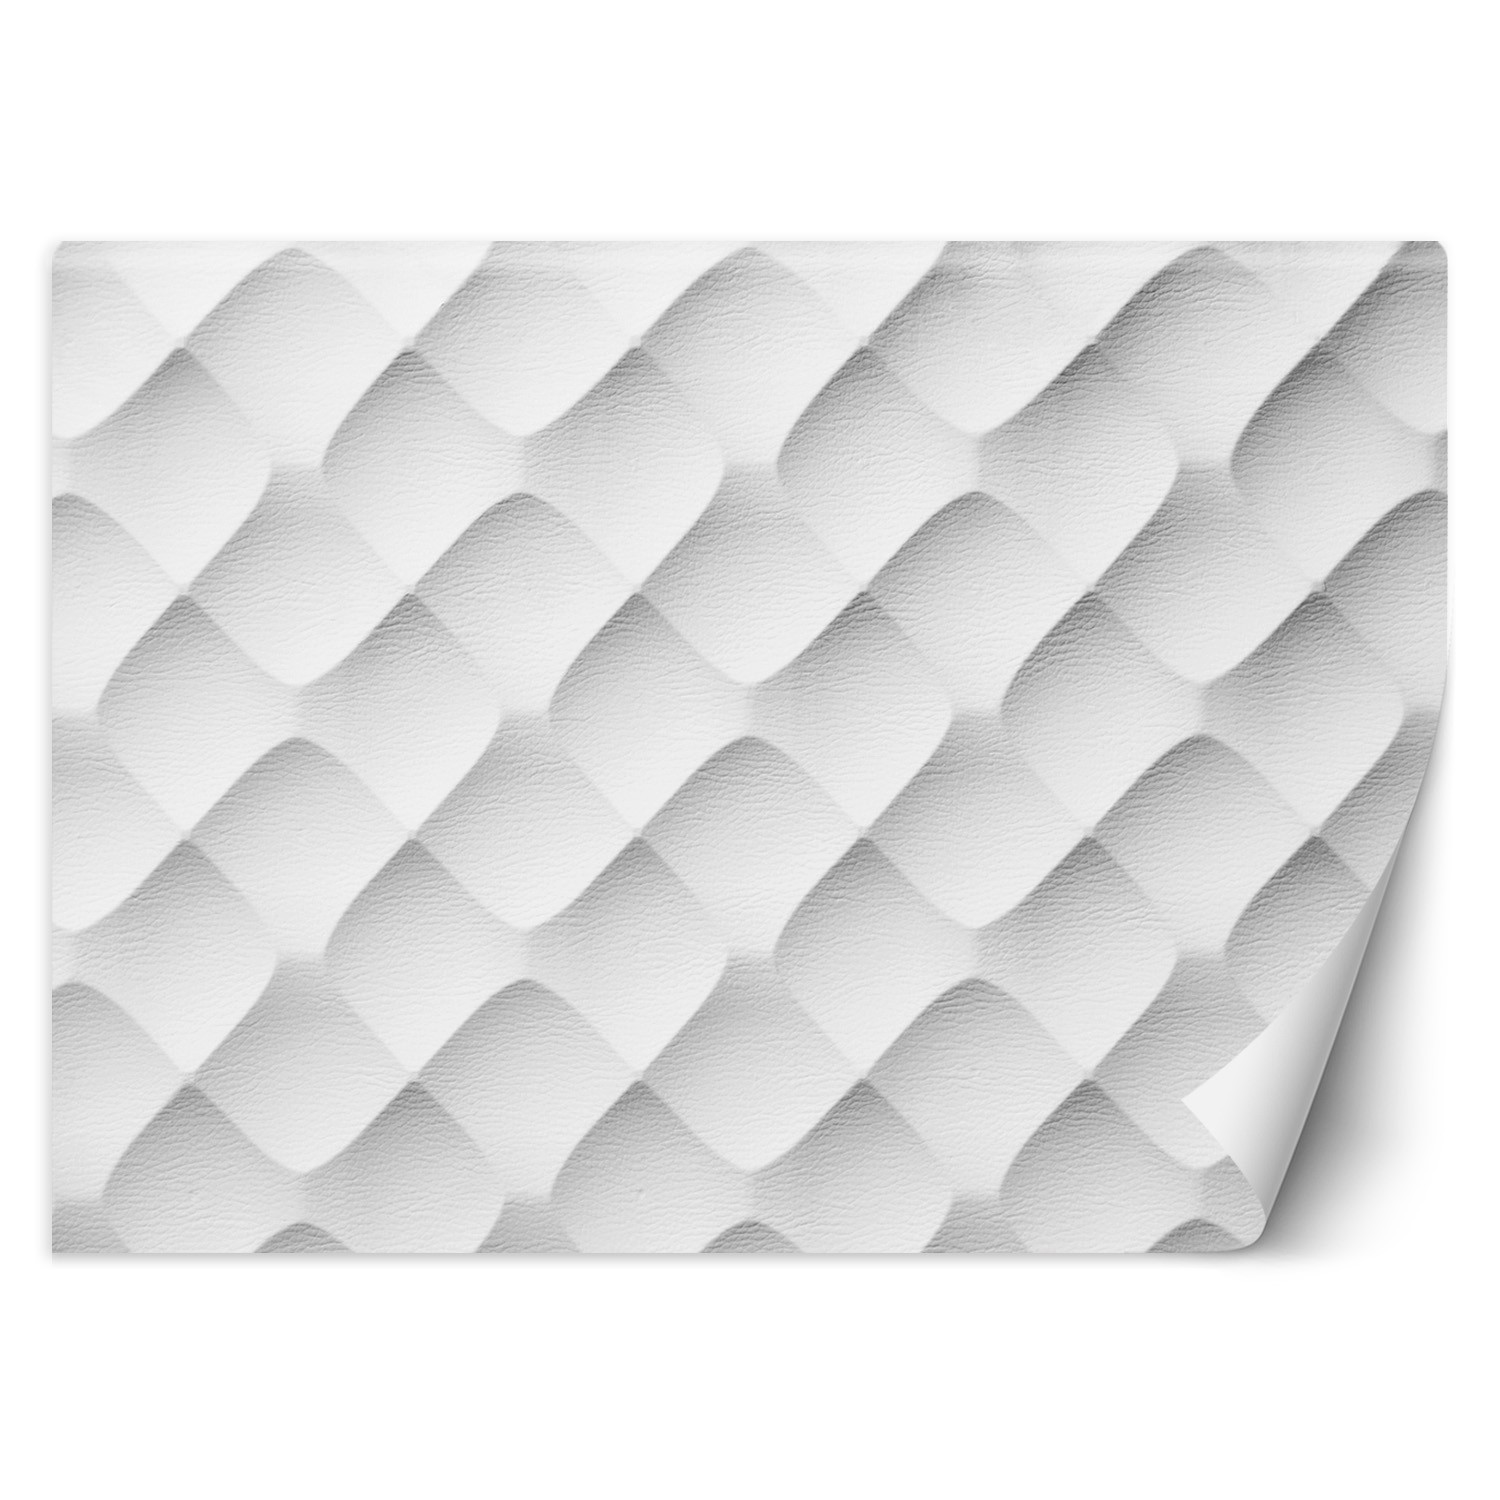 Trend24 – Behang – Abstract Patroon – Vliesbehang – Fotobehang 3D – Behang Woonkamer – 450x315x2 cm – Incl. behanglijm